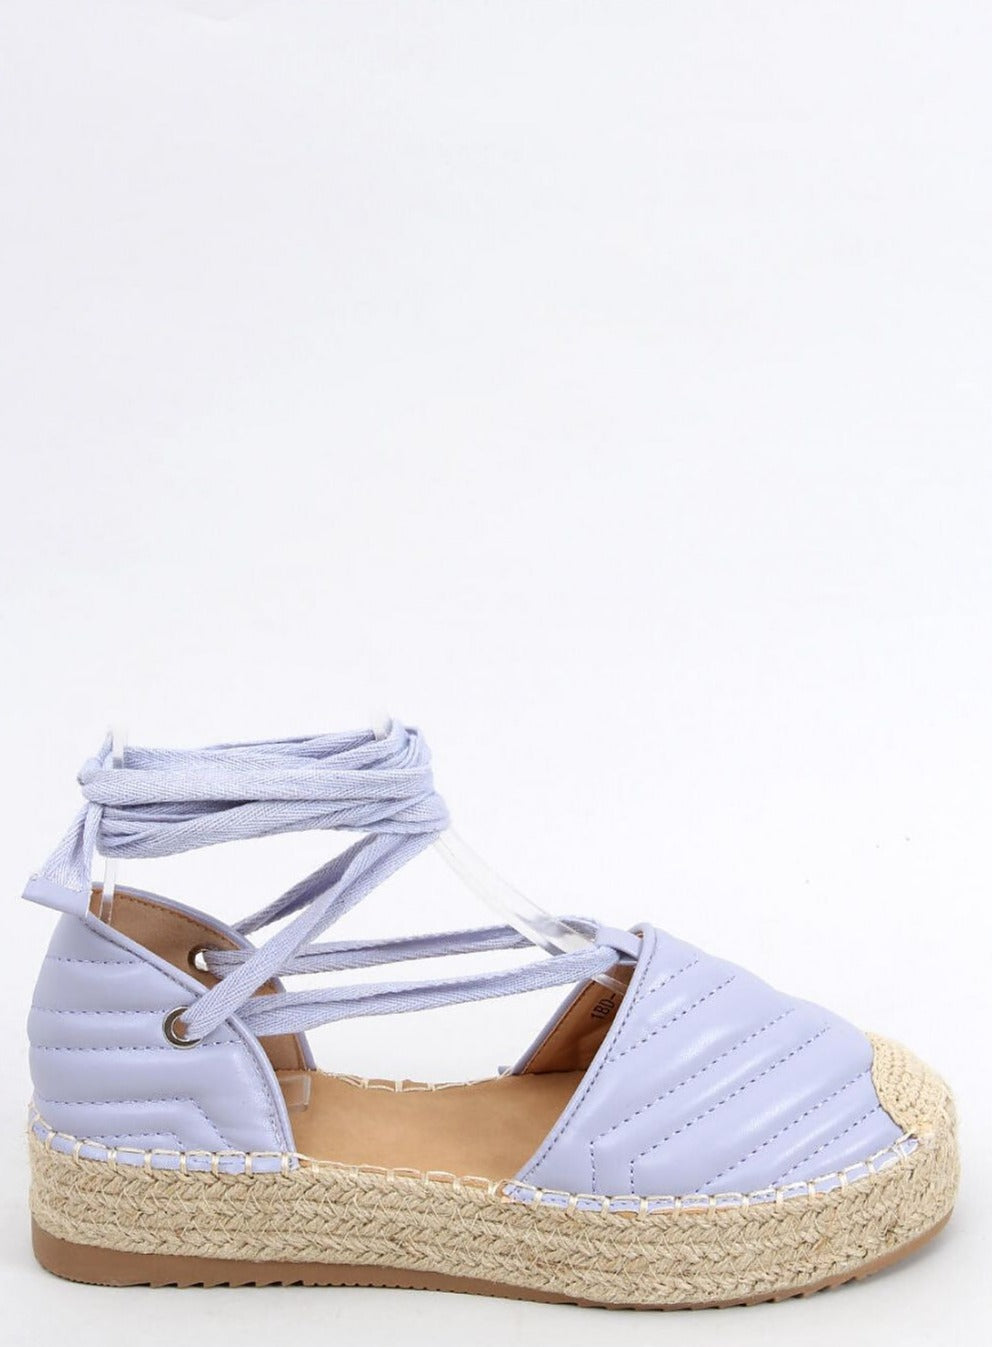 TEEK - Lavender Ankle Strap Platform Espadrille Shoes SHOES TEEK MH 5.5  